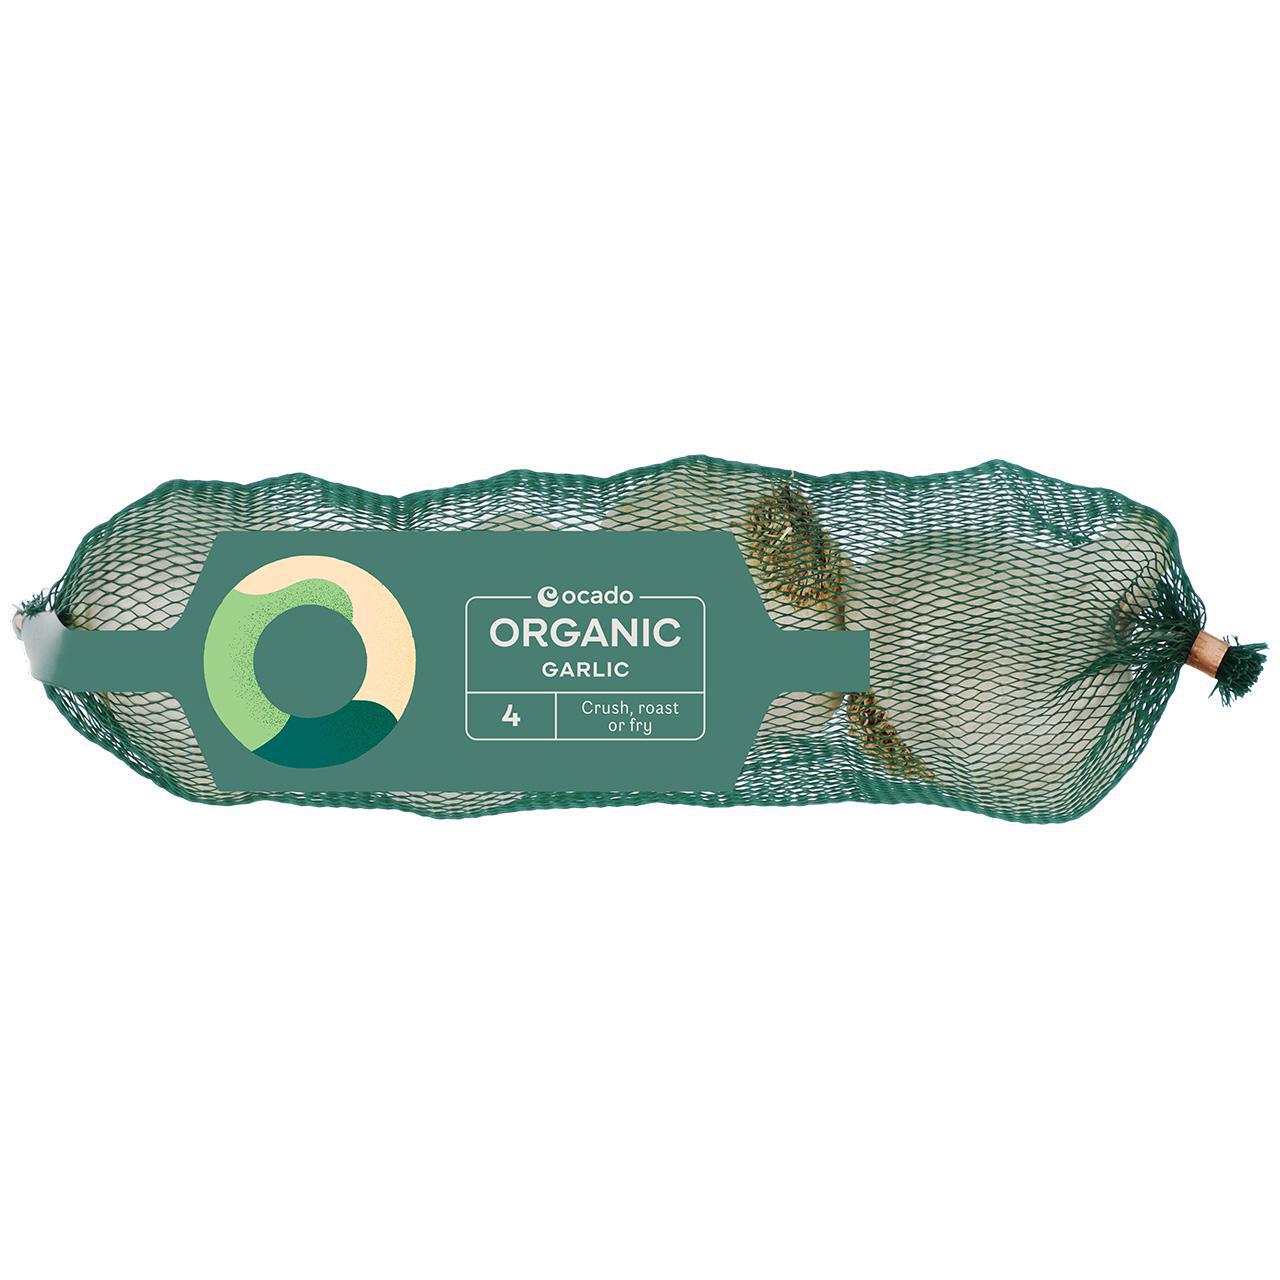 Ocado Organic Garlic 4 per pack